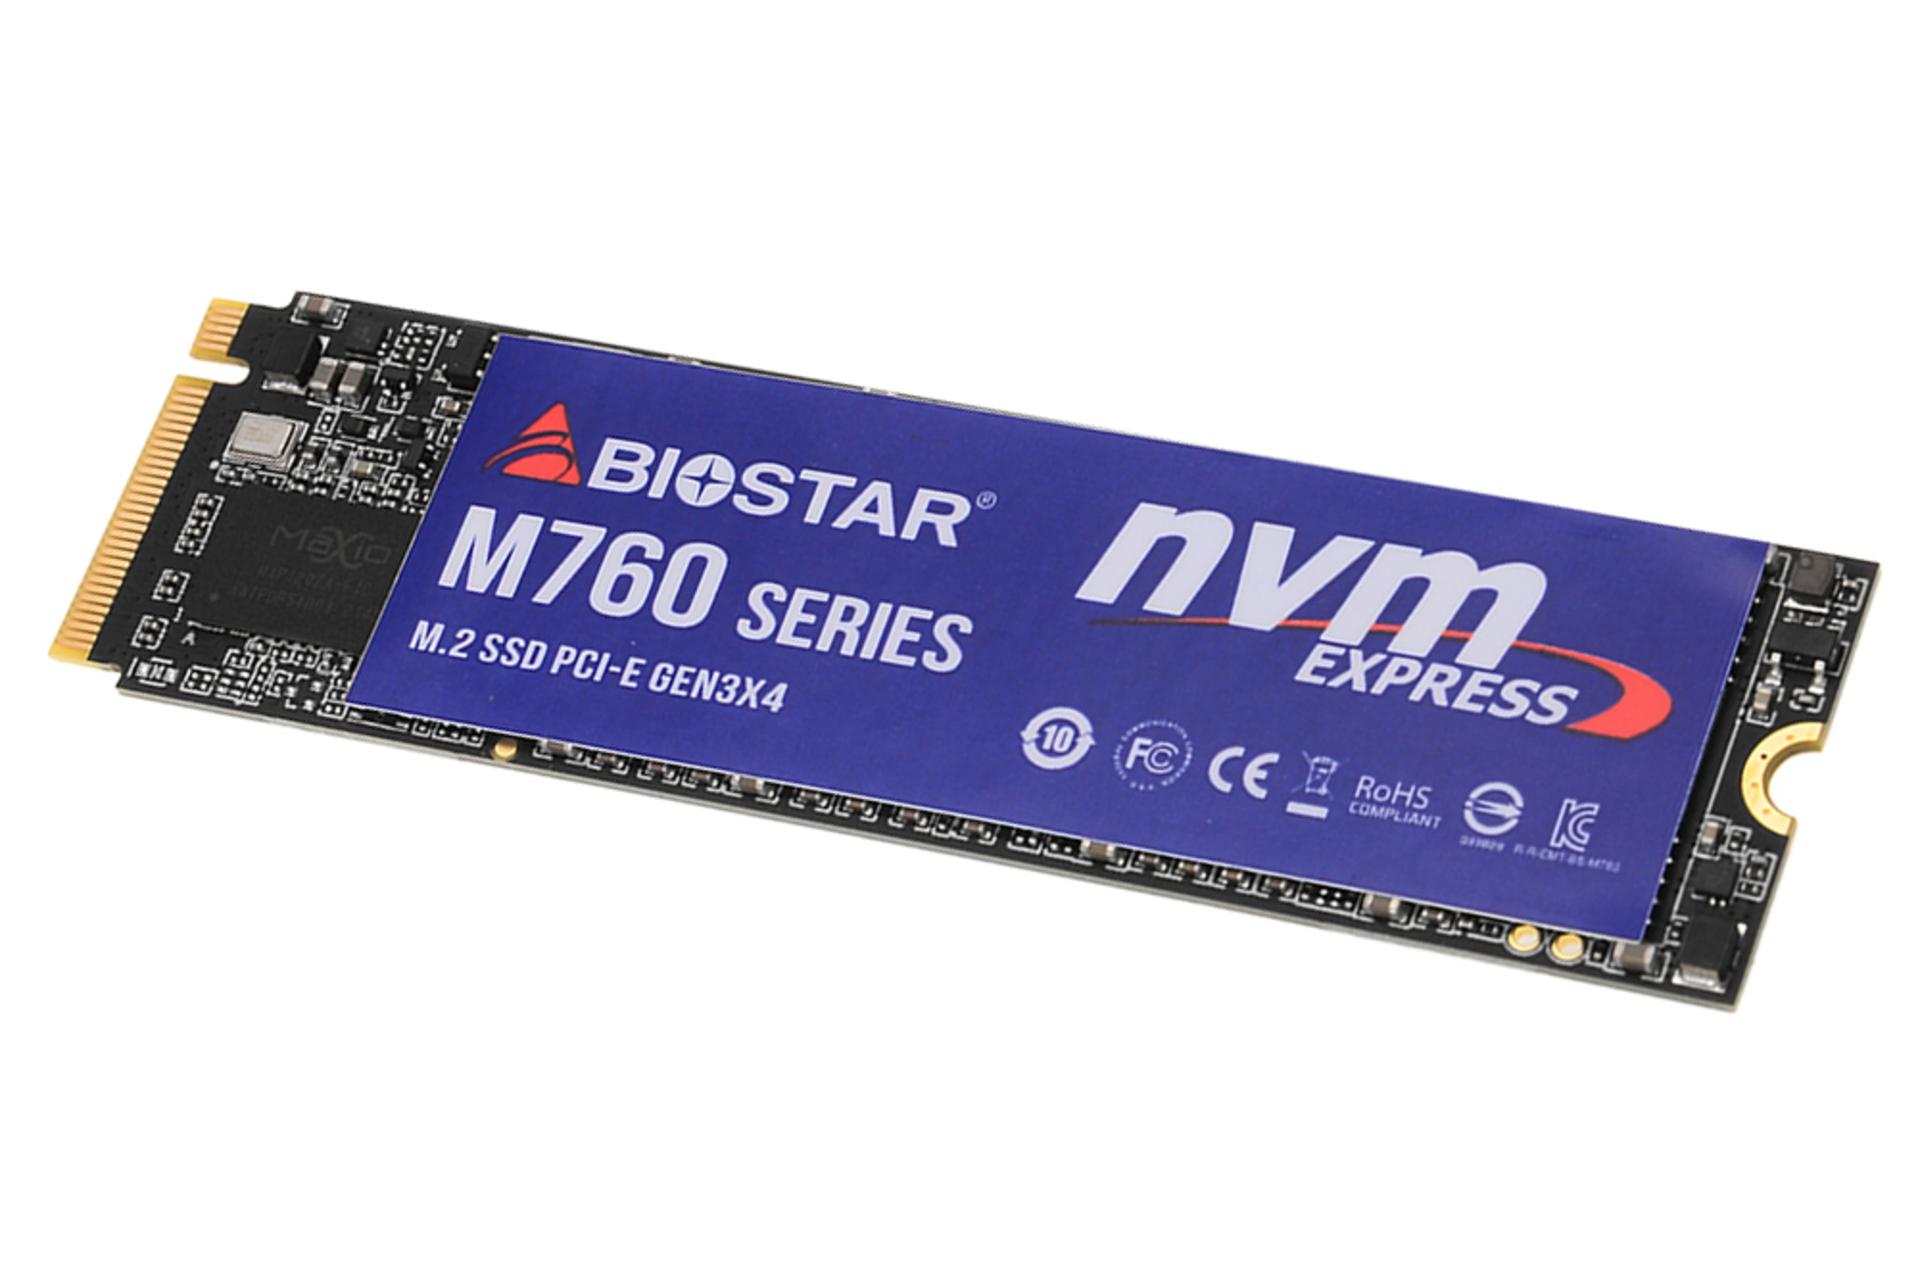 SSD بایوستار M760 NVMe M.2 ظرفیت 256 گیگابایت